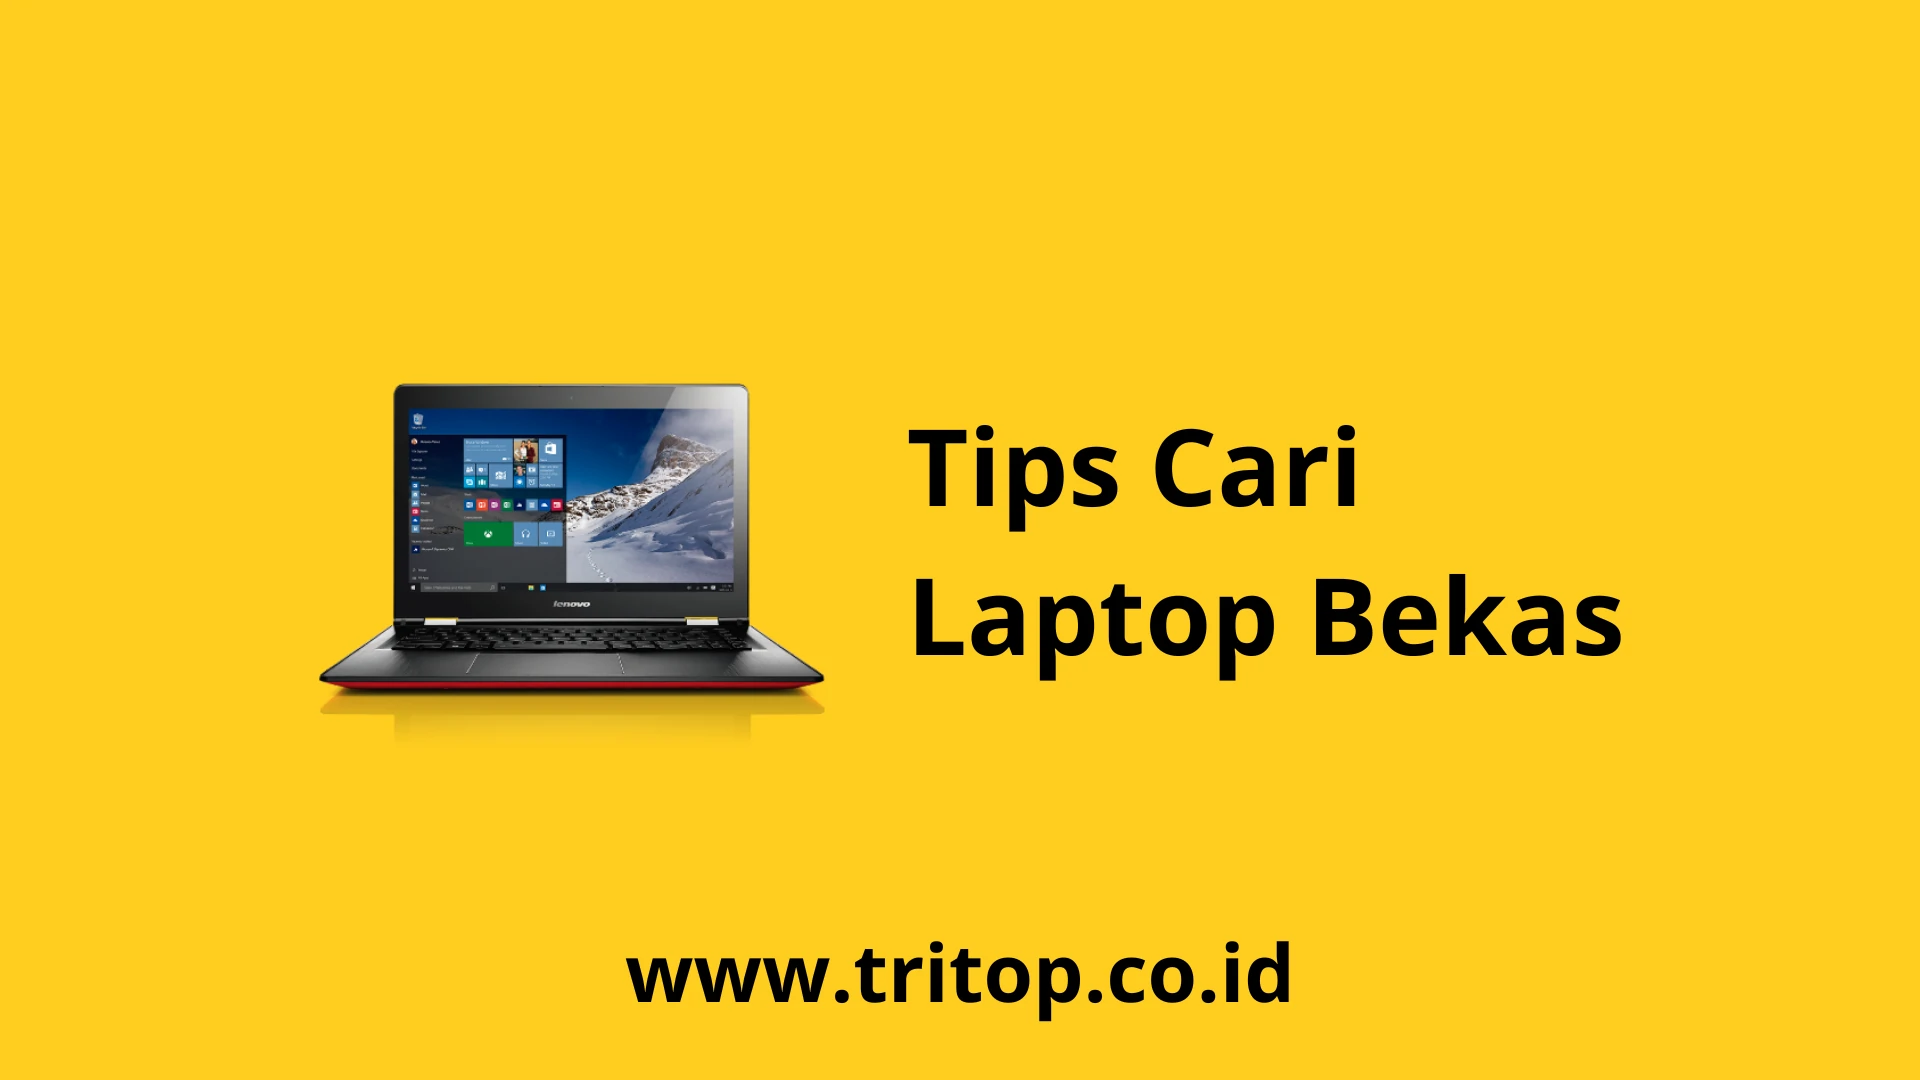 Cari Laptop Bekas Tritop.co.id